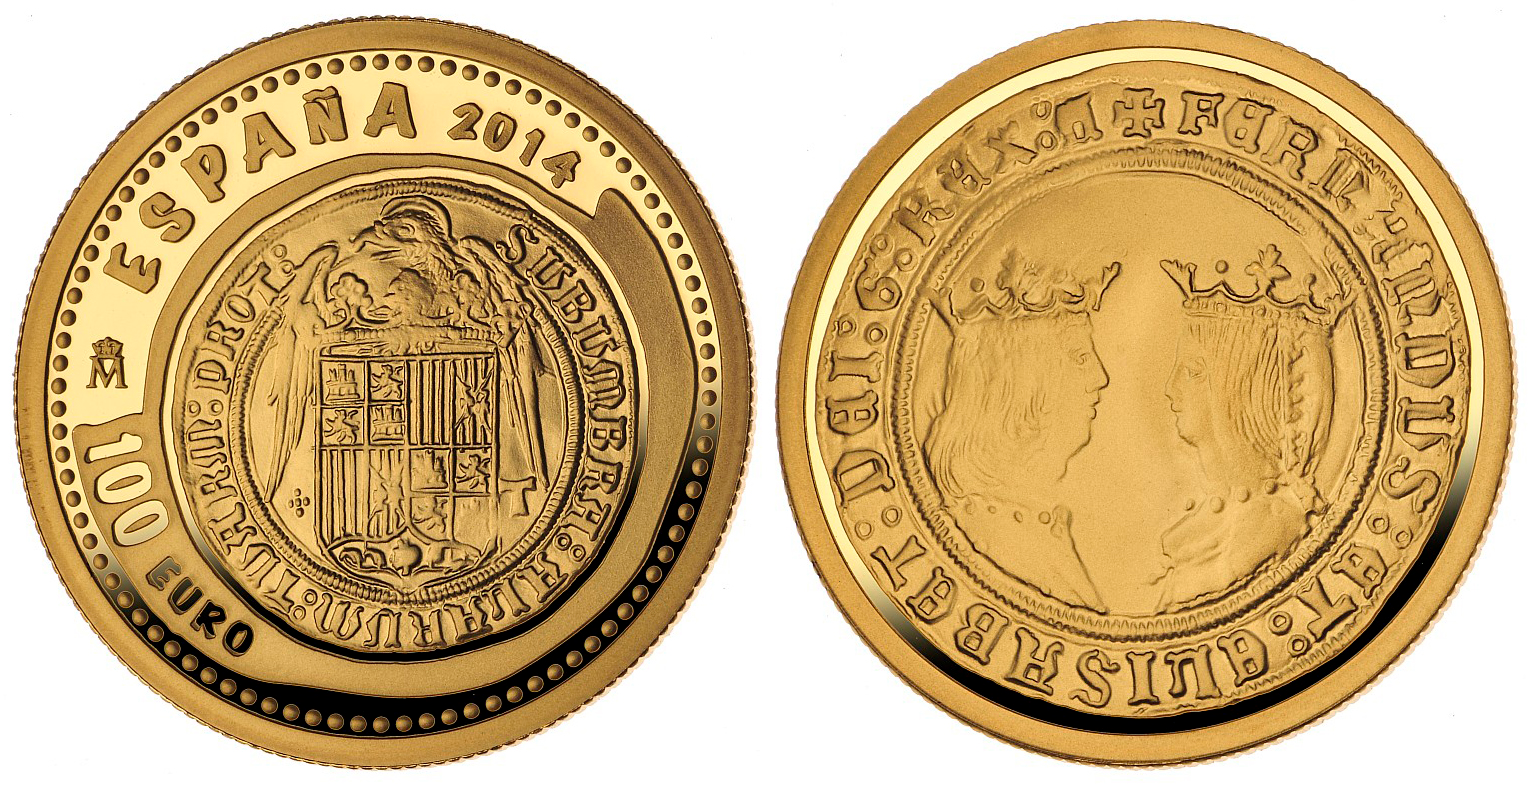 100 Euro монета. Испанские монеты. Монета евро Король. Испанские золотые монеты.